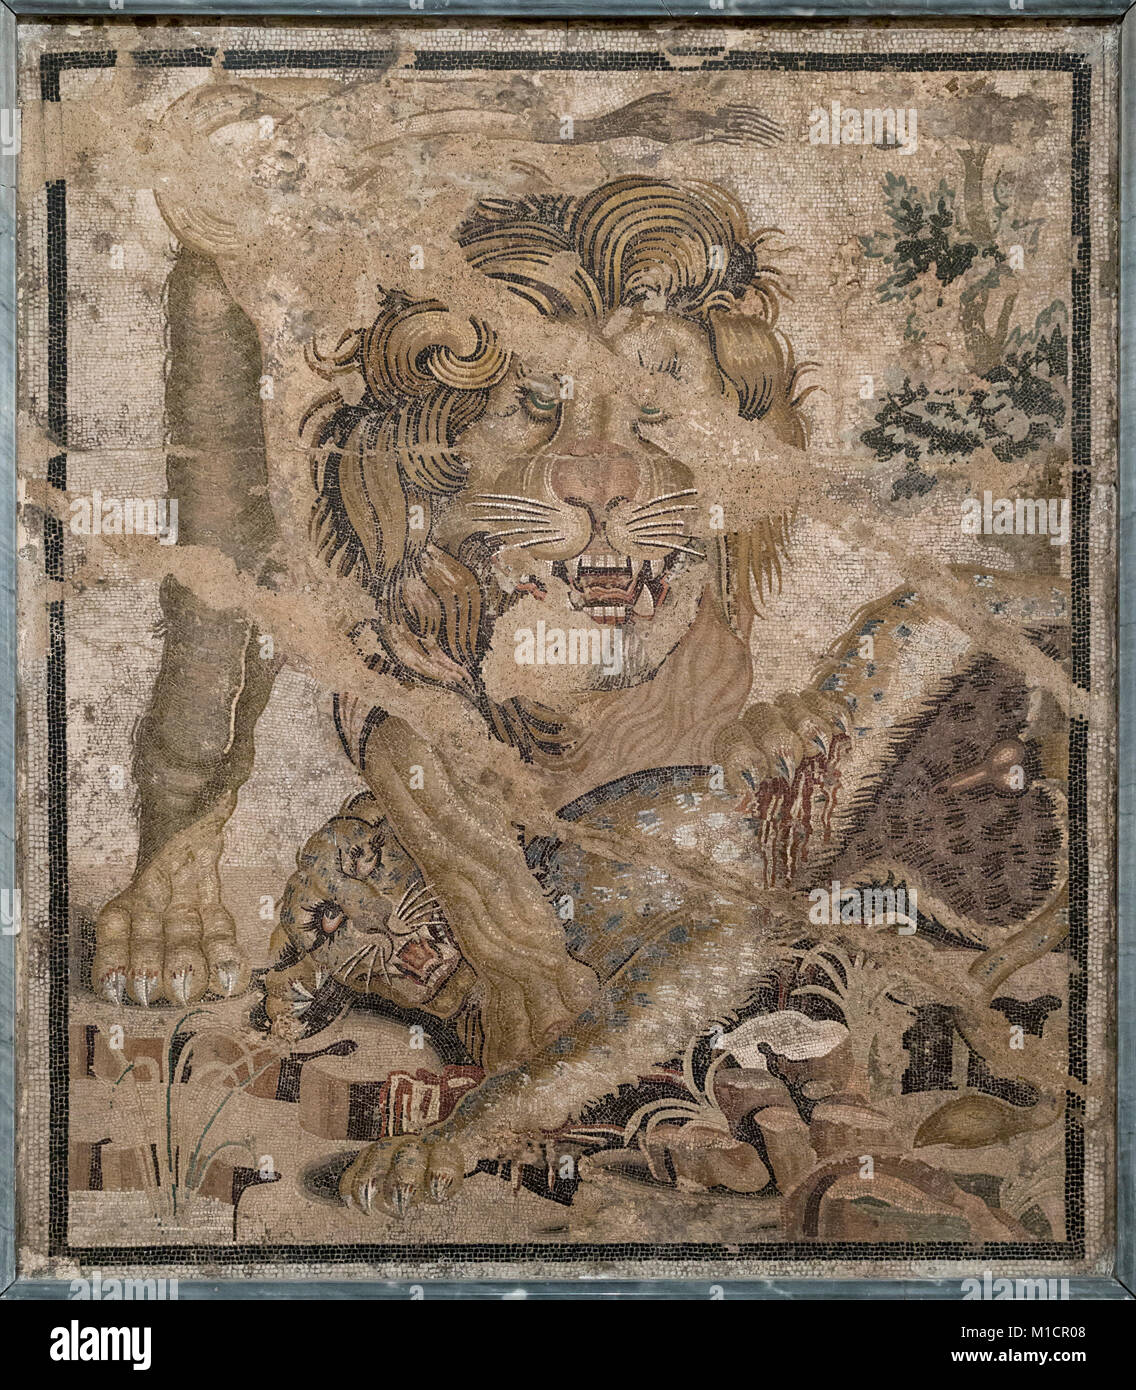 Neapel. Italien. Lion, Leopard, römisches Fußbodenmosaik aus Pompeji. Museo Archeologico Nazionale di Napoli. Nationalen Archäologischen Museum. Stockfoto